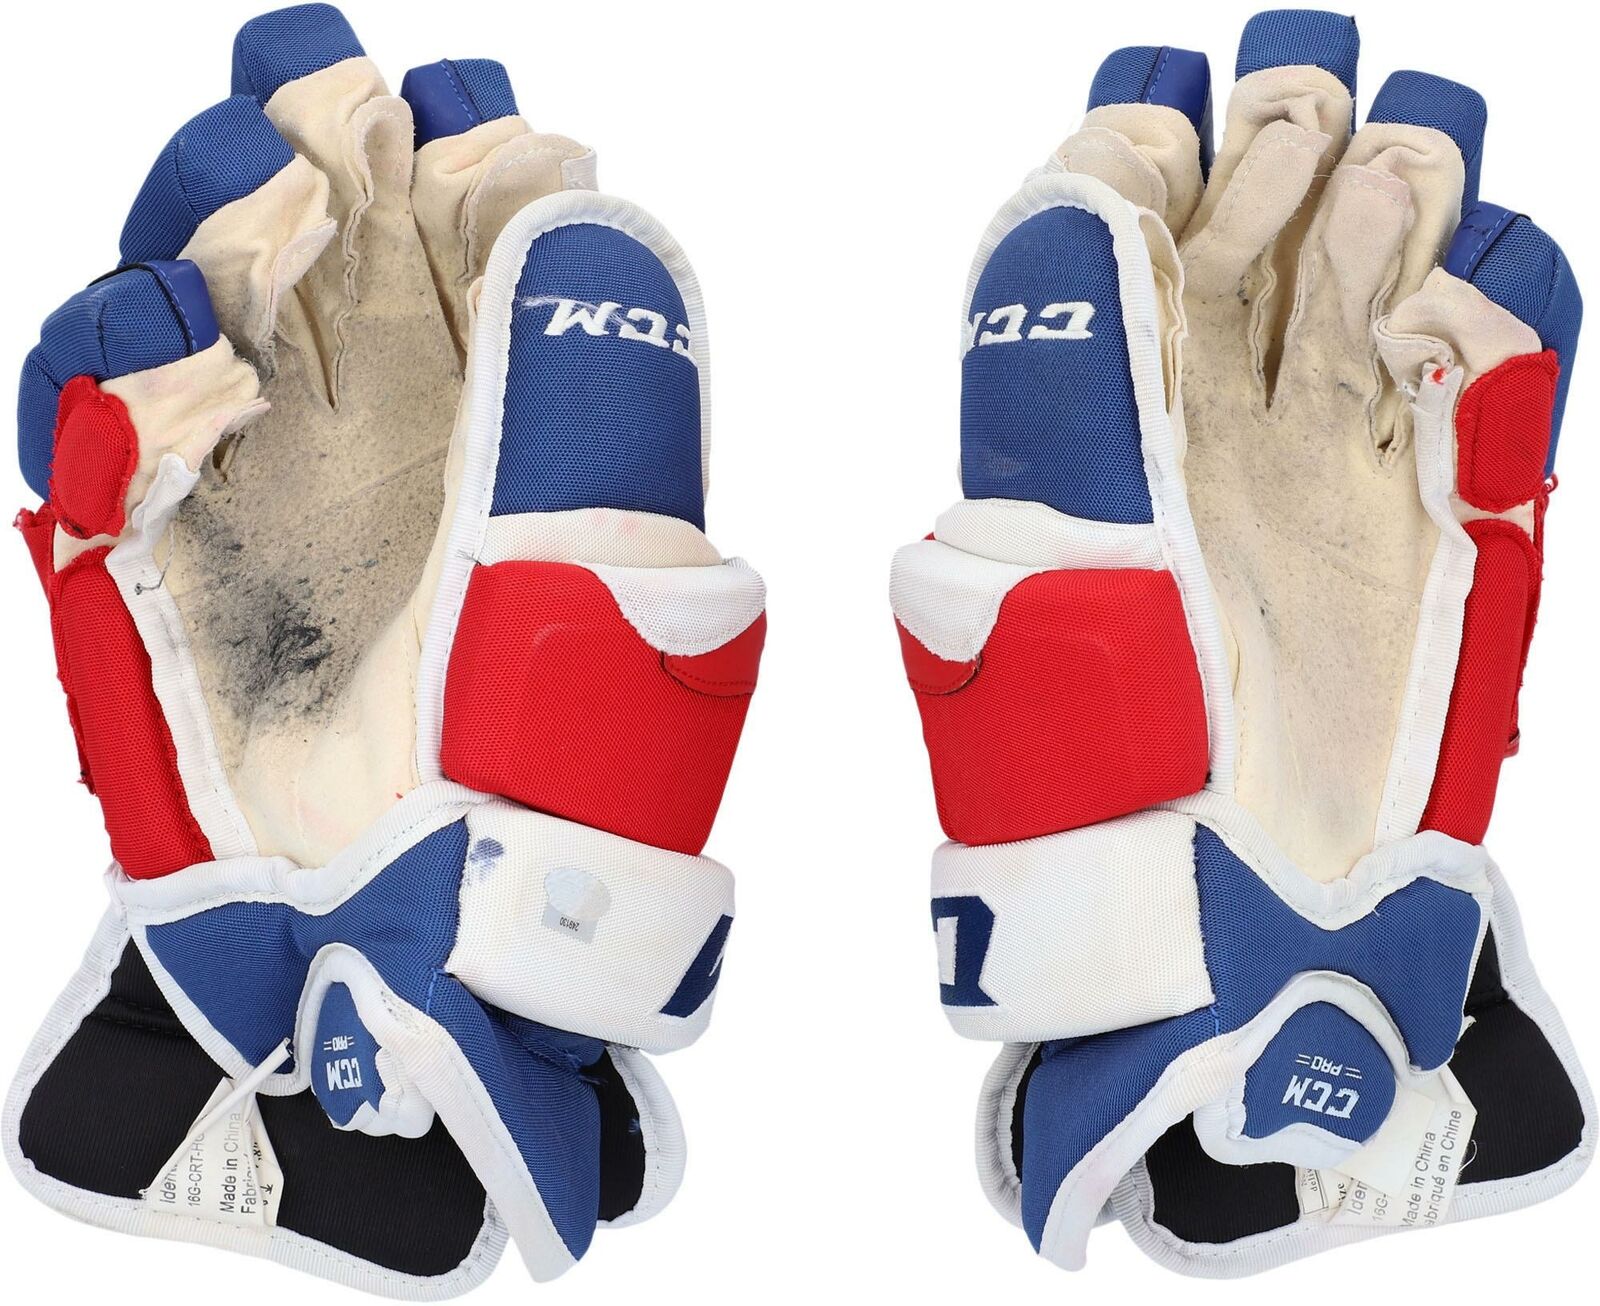 Oscar Lindberg New York Rangers Gu #24 Ccm Gloves From The 2016-17 Nhl Season